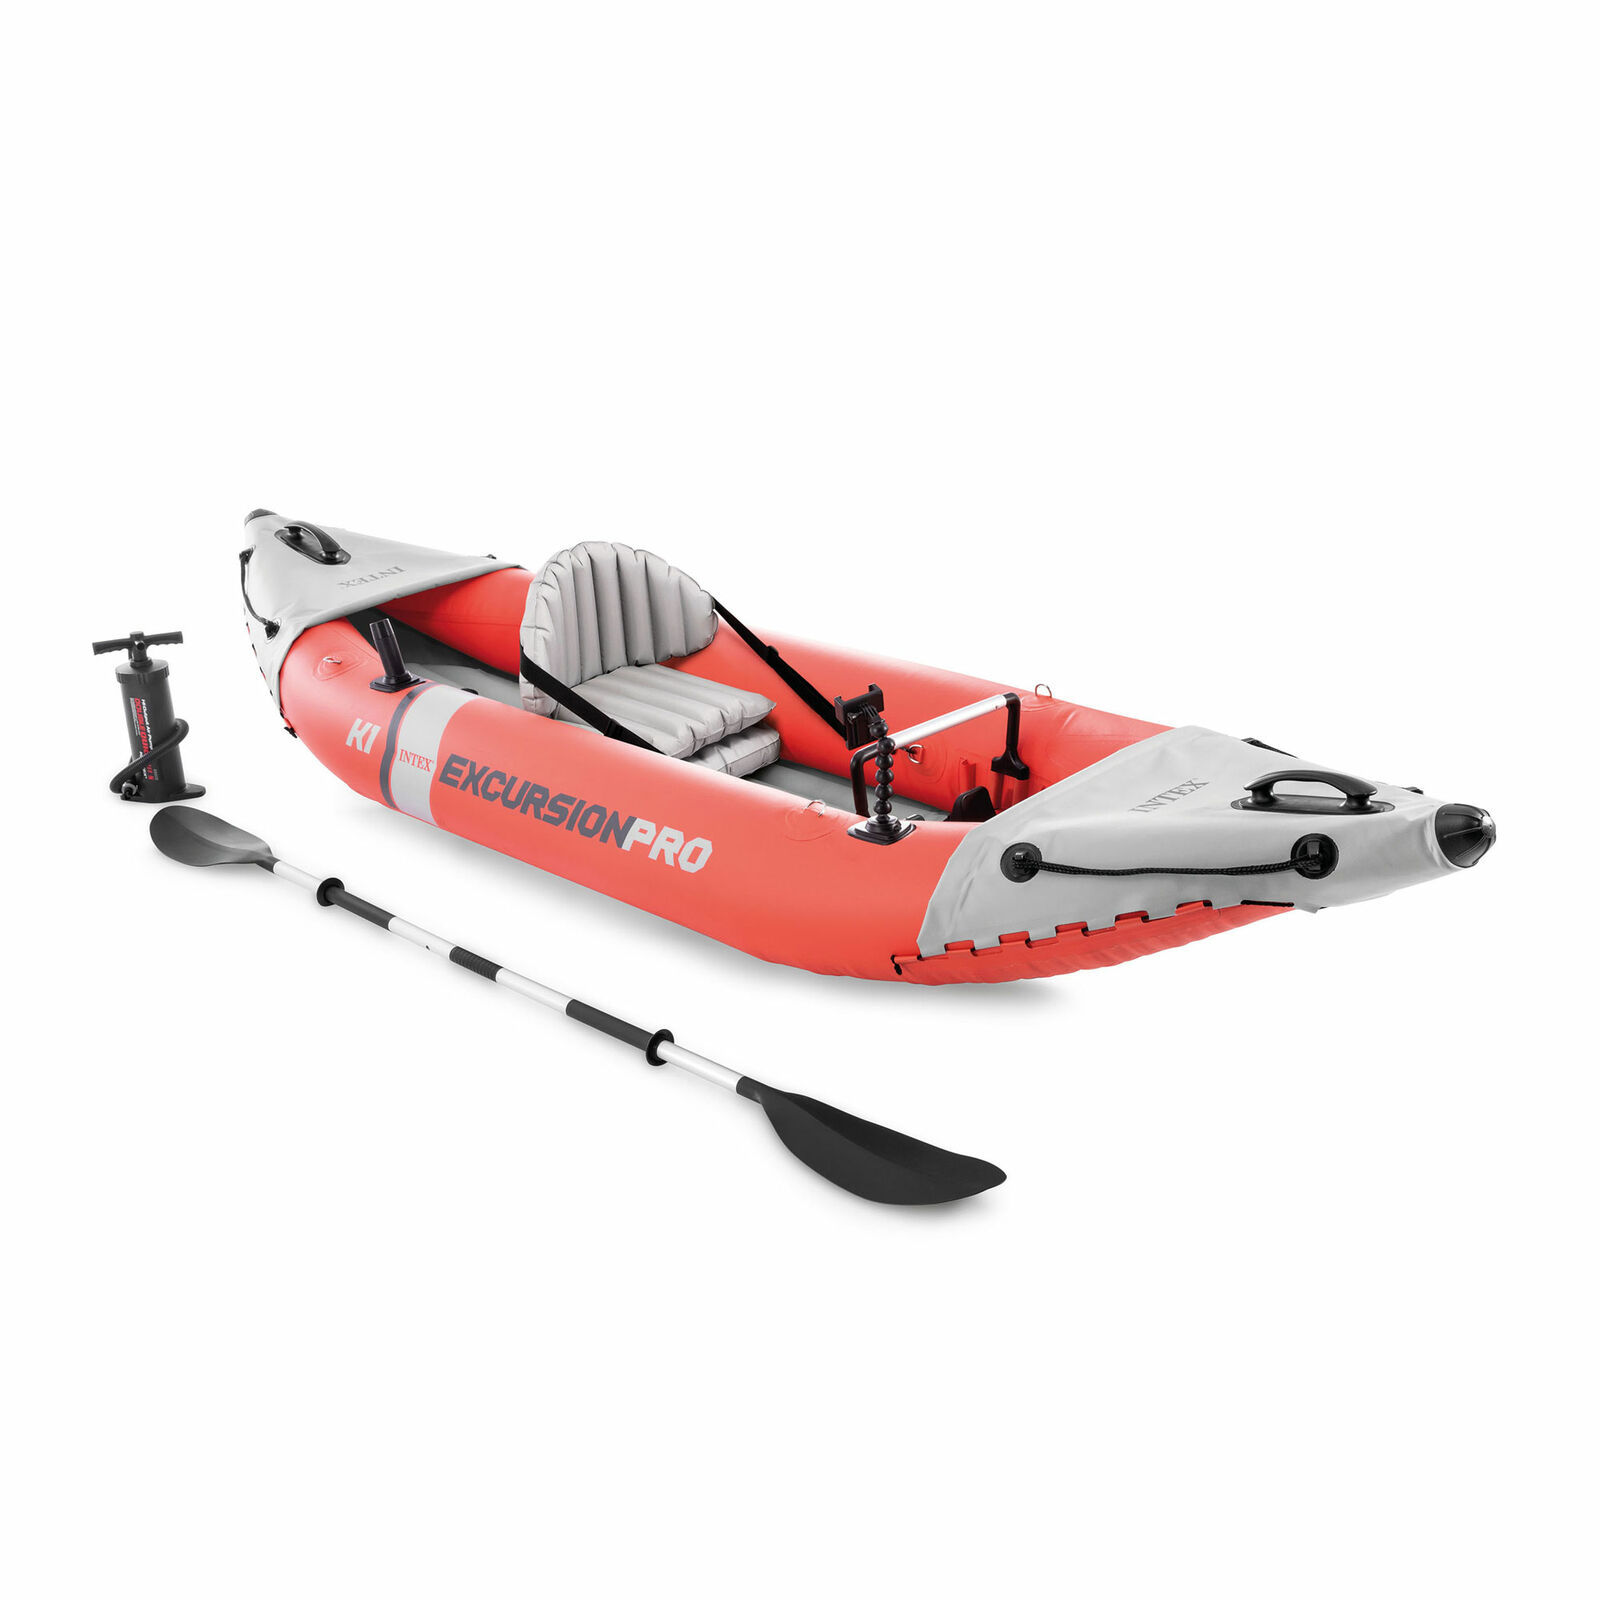 Intex Excursion Pro K1 Single Person Inflatable Vinyl Fishing Kayak w/ Oar/Pump - $314.99